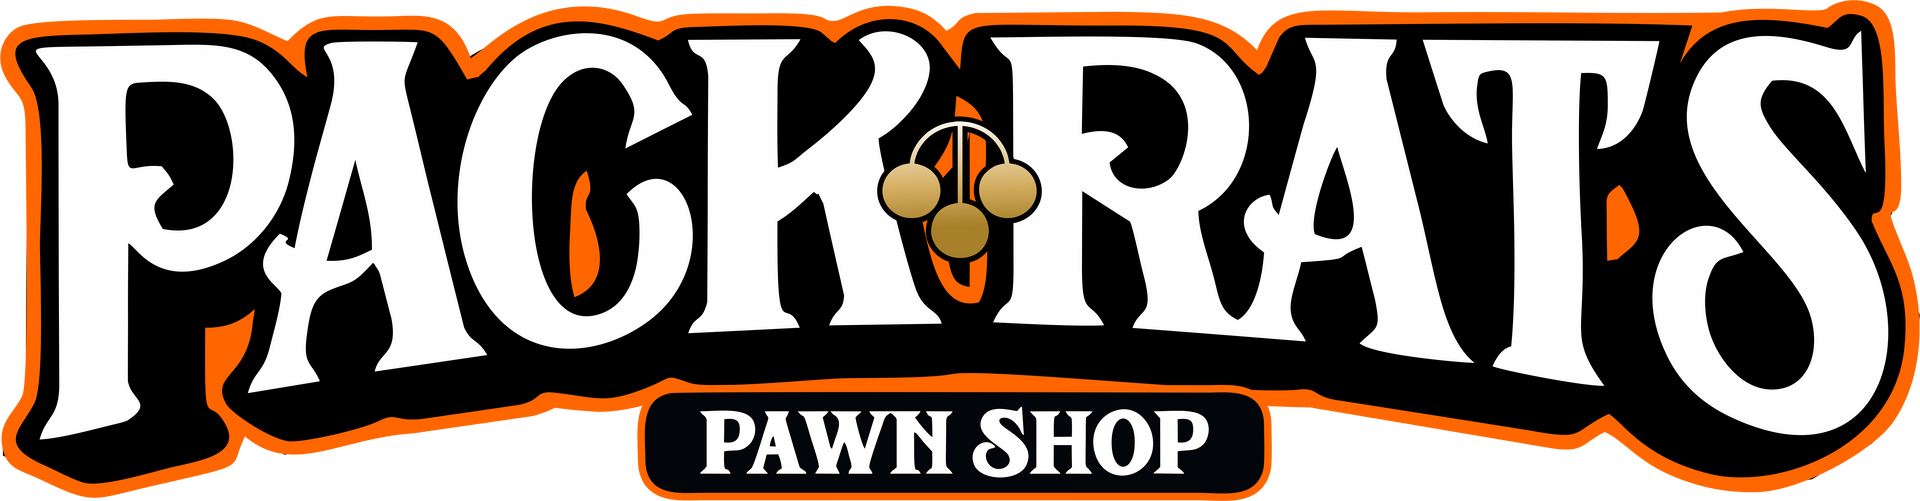 Pack Rats Pawn Shop logo